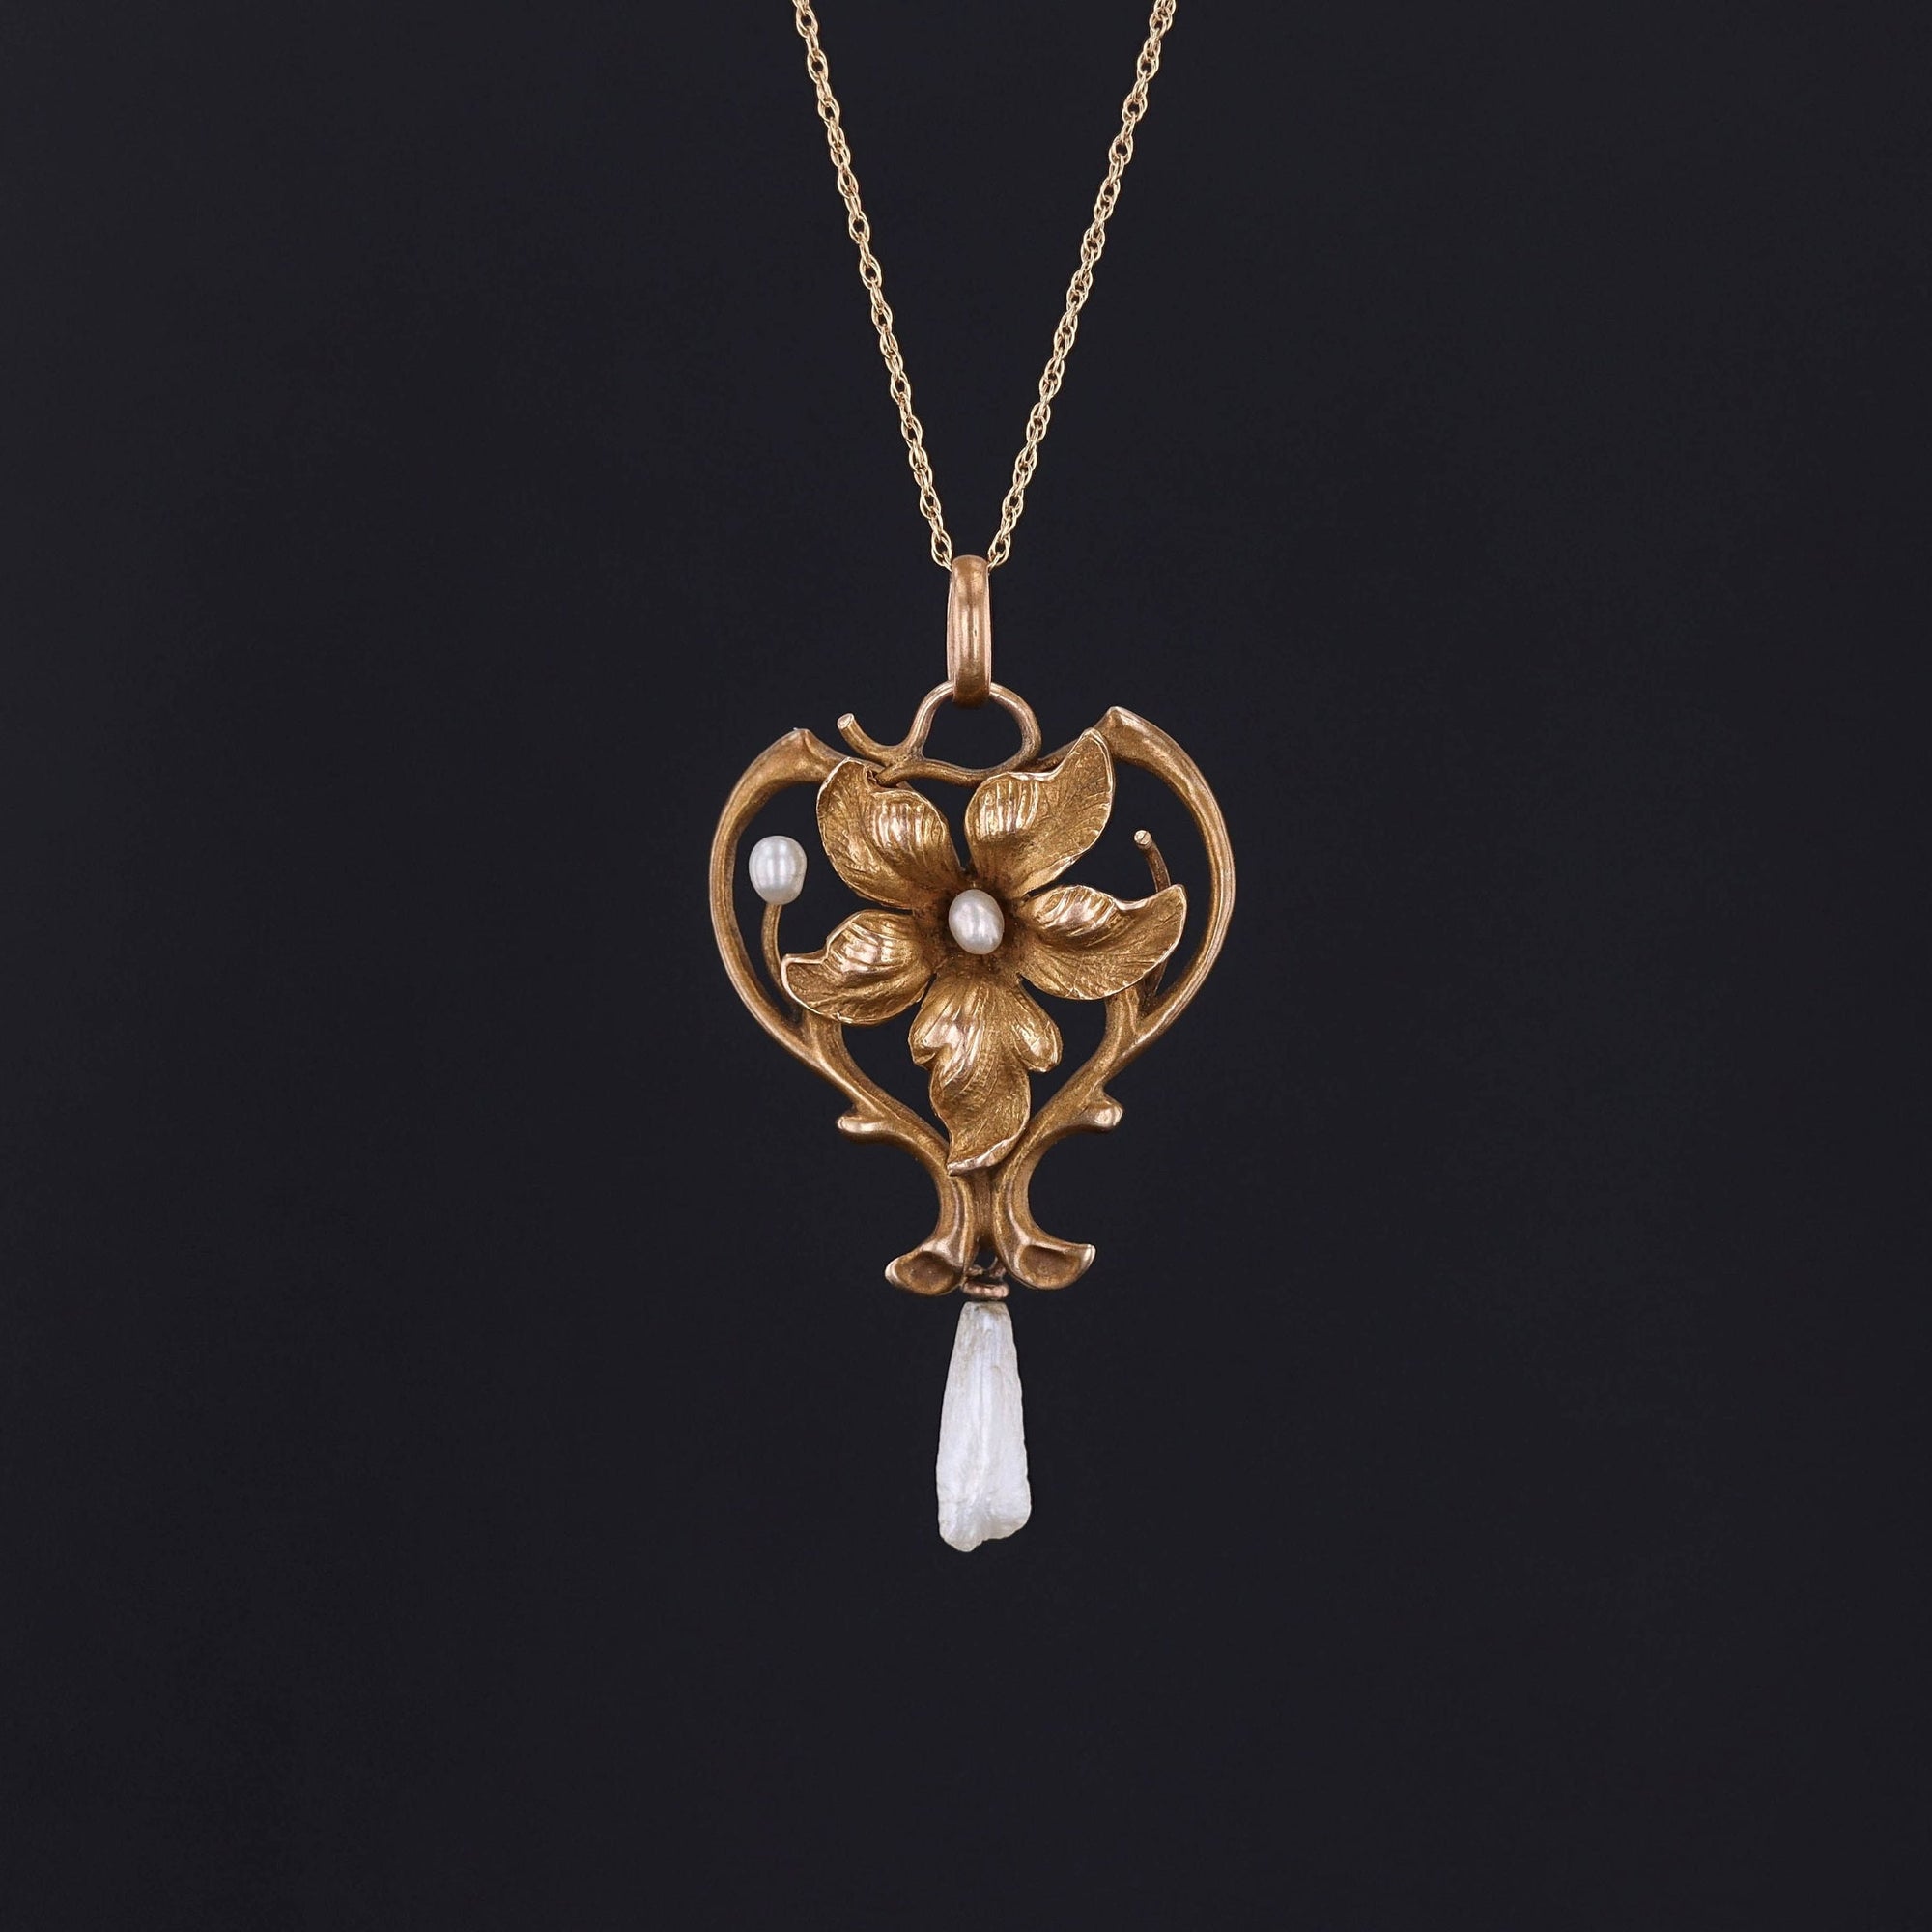 Antique Violet Pendant | 14k Gold & Pearl Pendant on Optional 10k Chain